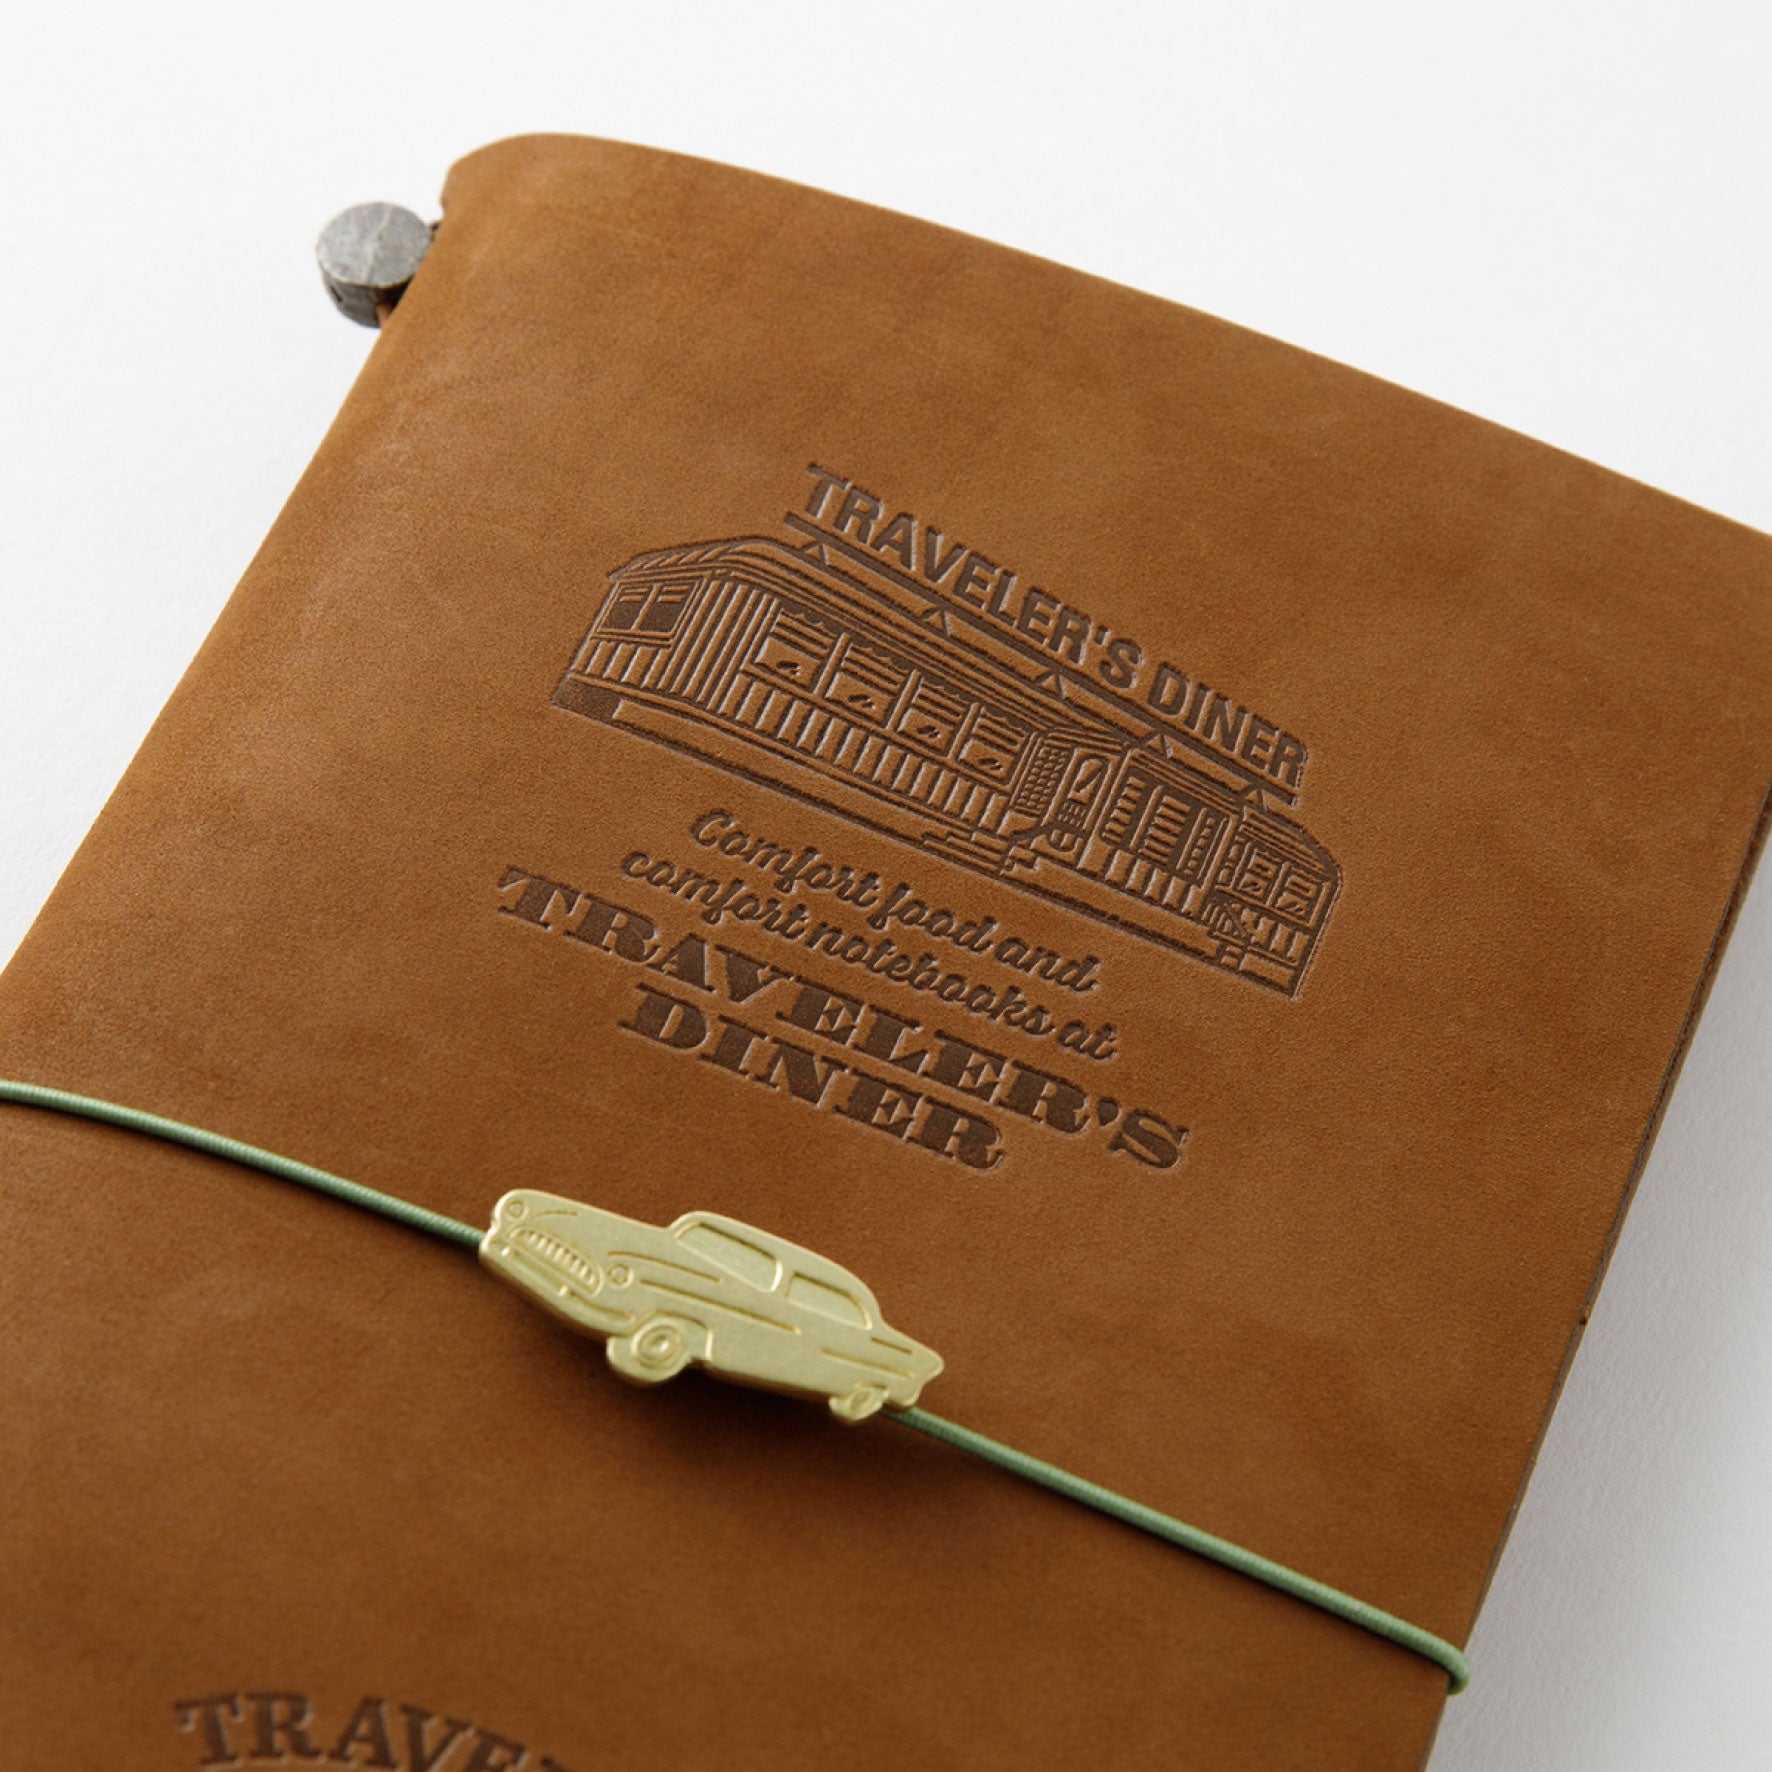 Traveler's Company - Traveler's Notebook - Limited Set - Traveler's Diner